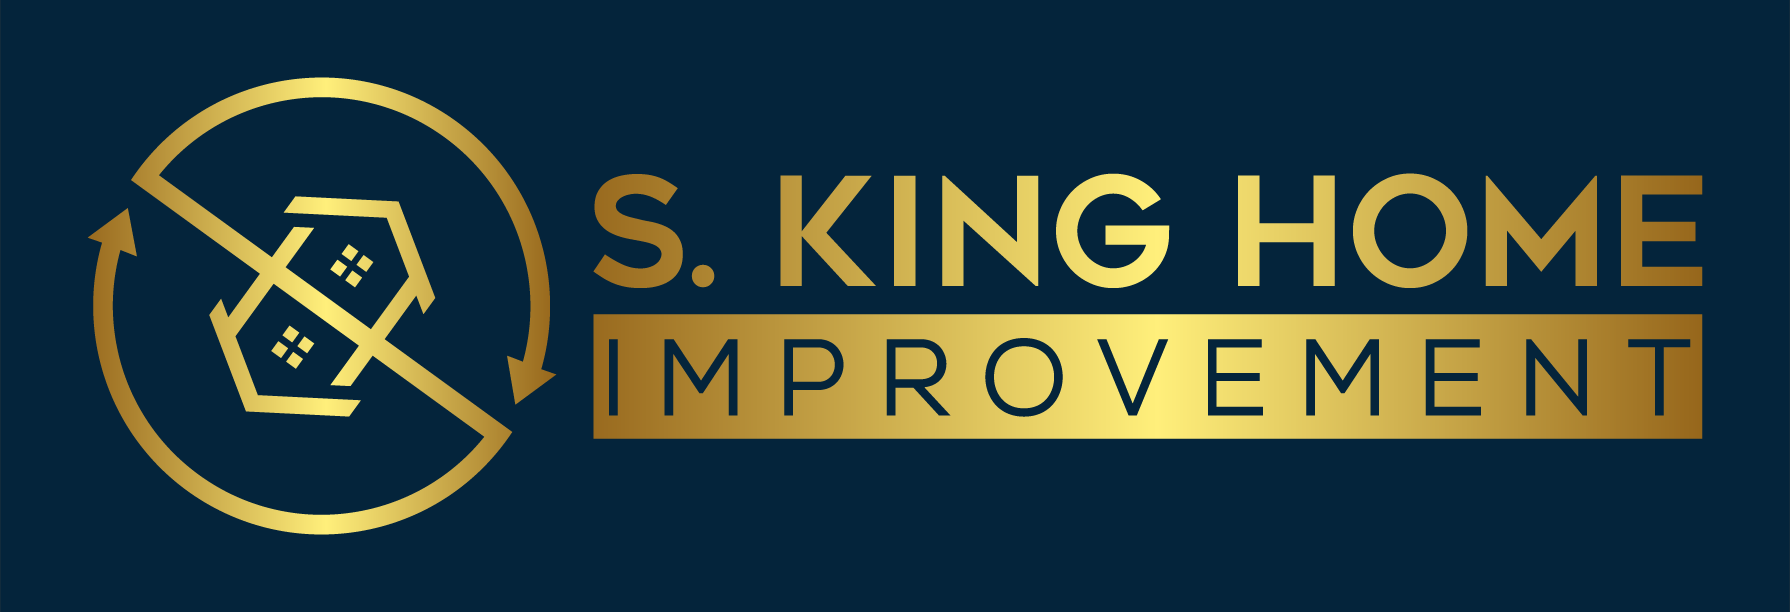 S. King Home Improvement